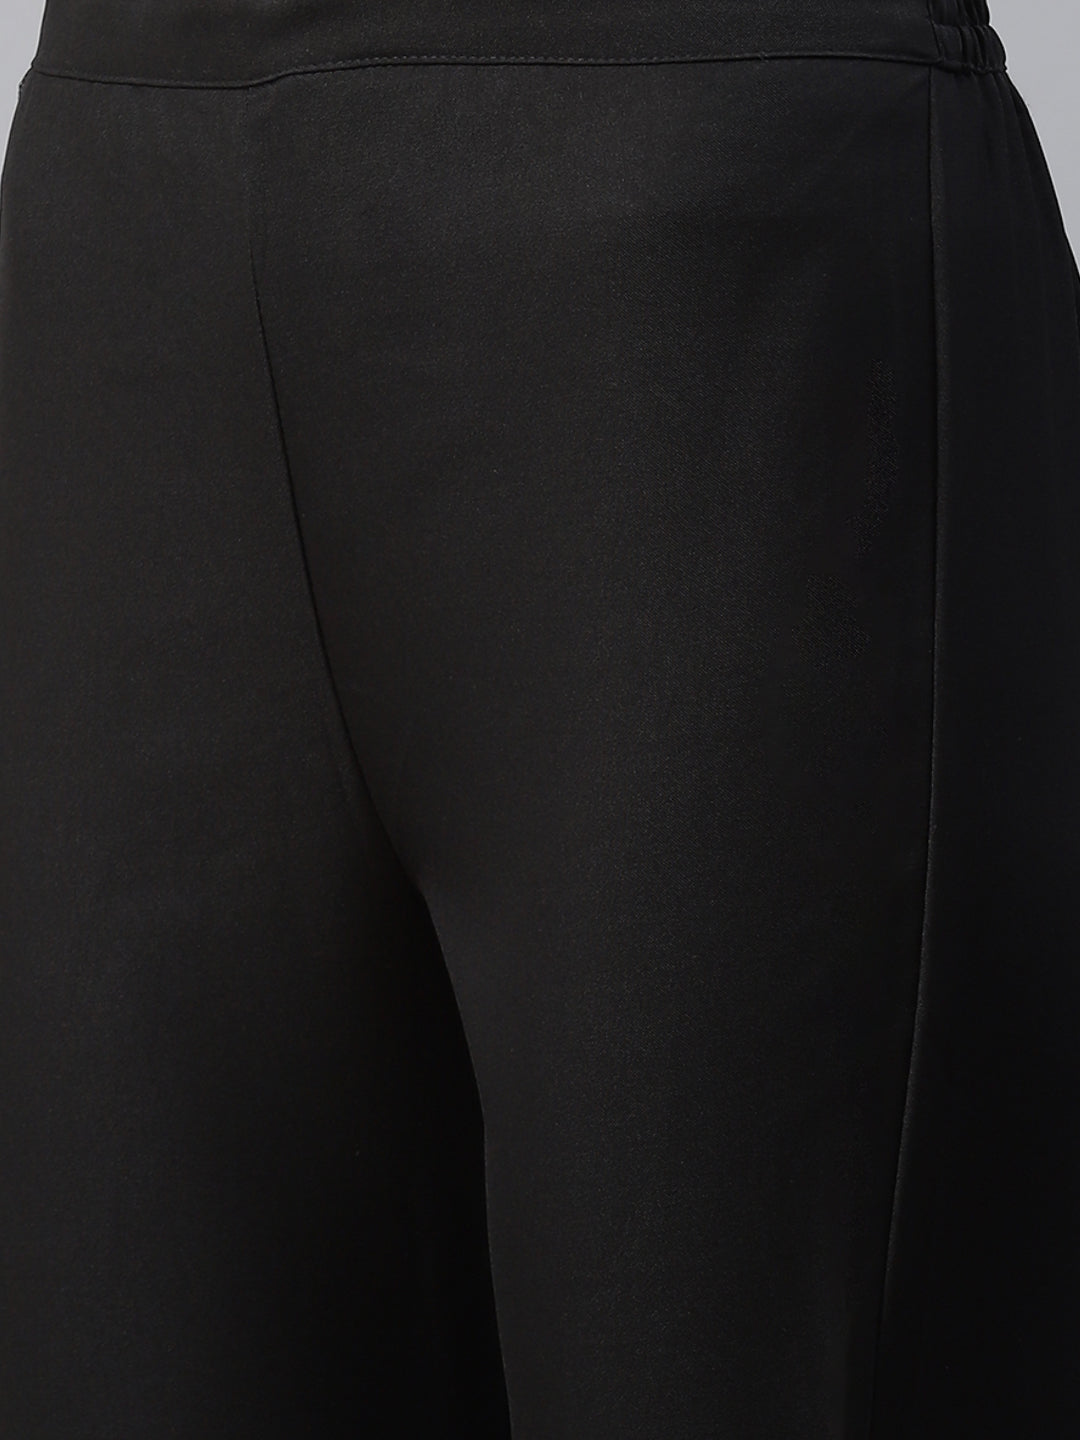 Women's Black Digital Printed Kurta And Pants by Ziyaa- (2pcs set)